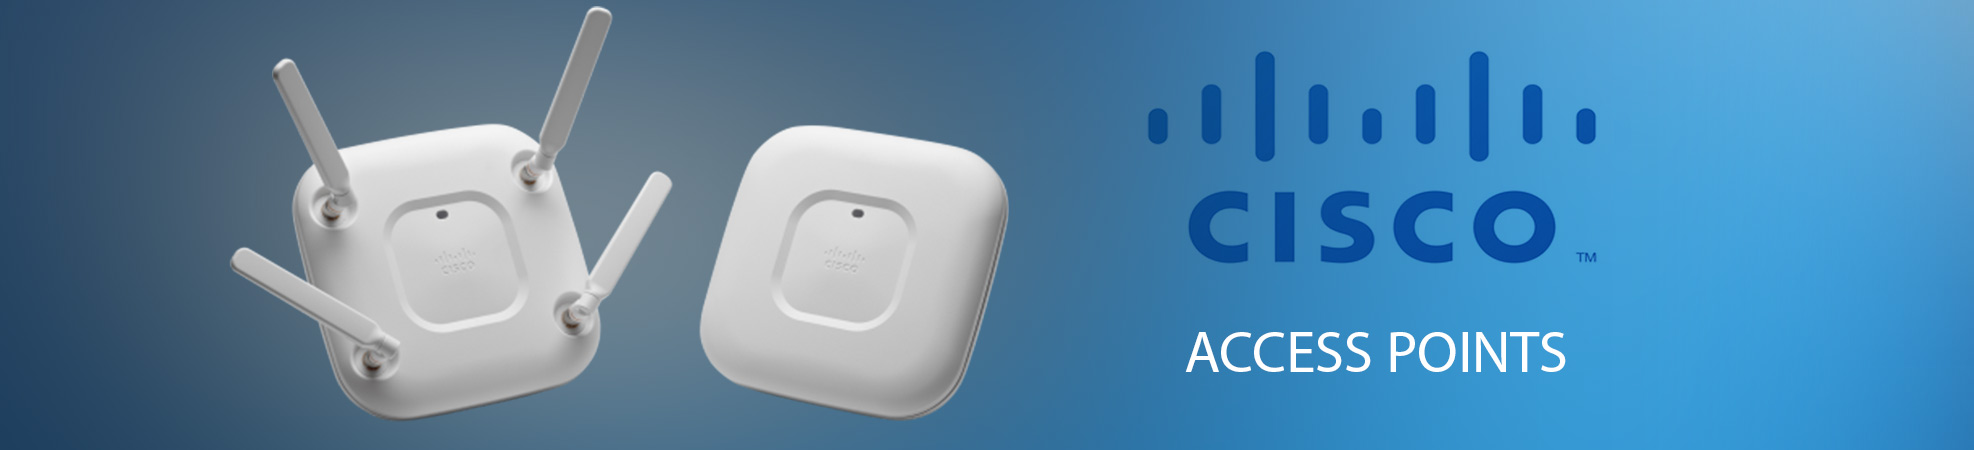 Cisco wireless access point dubai